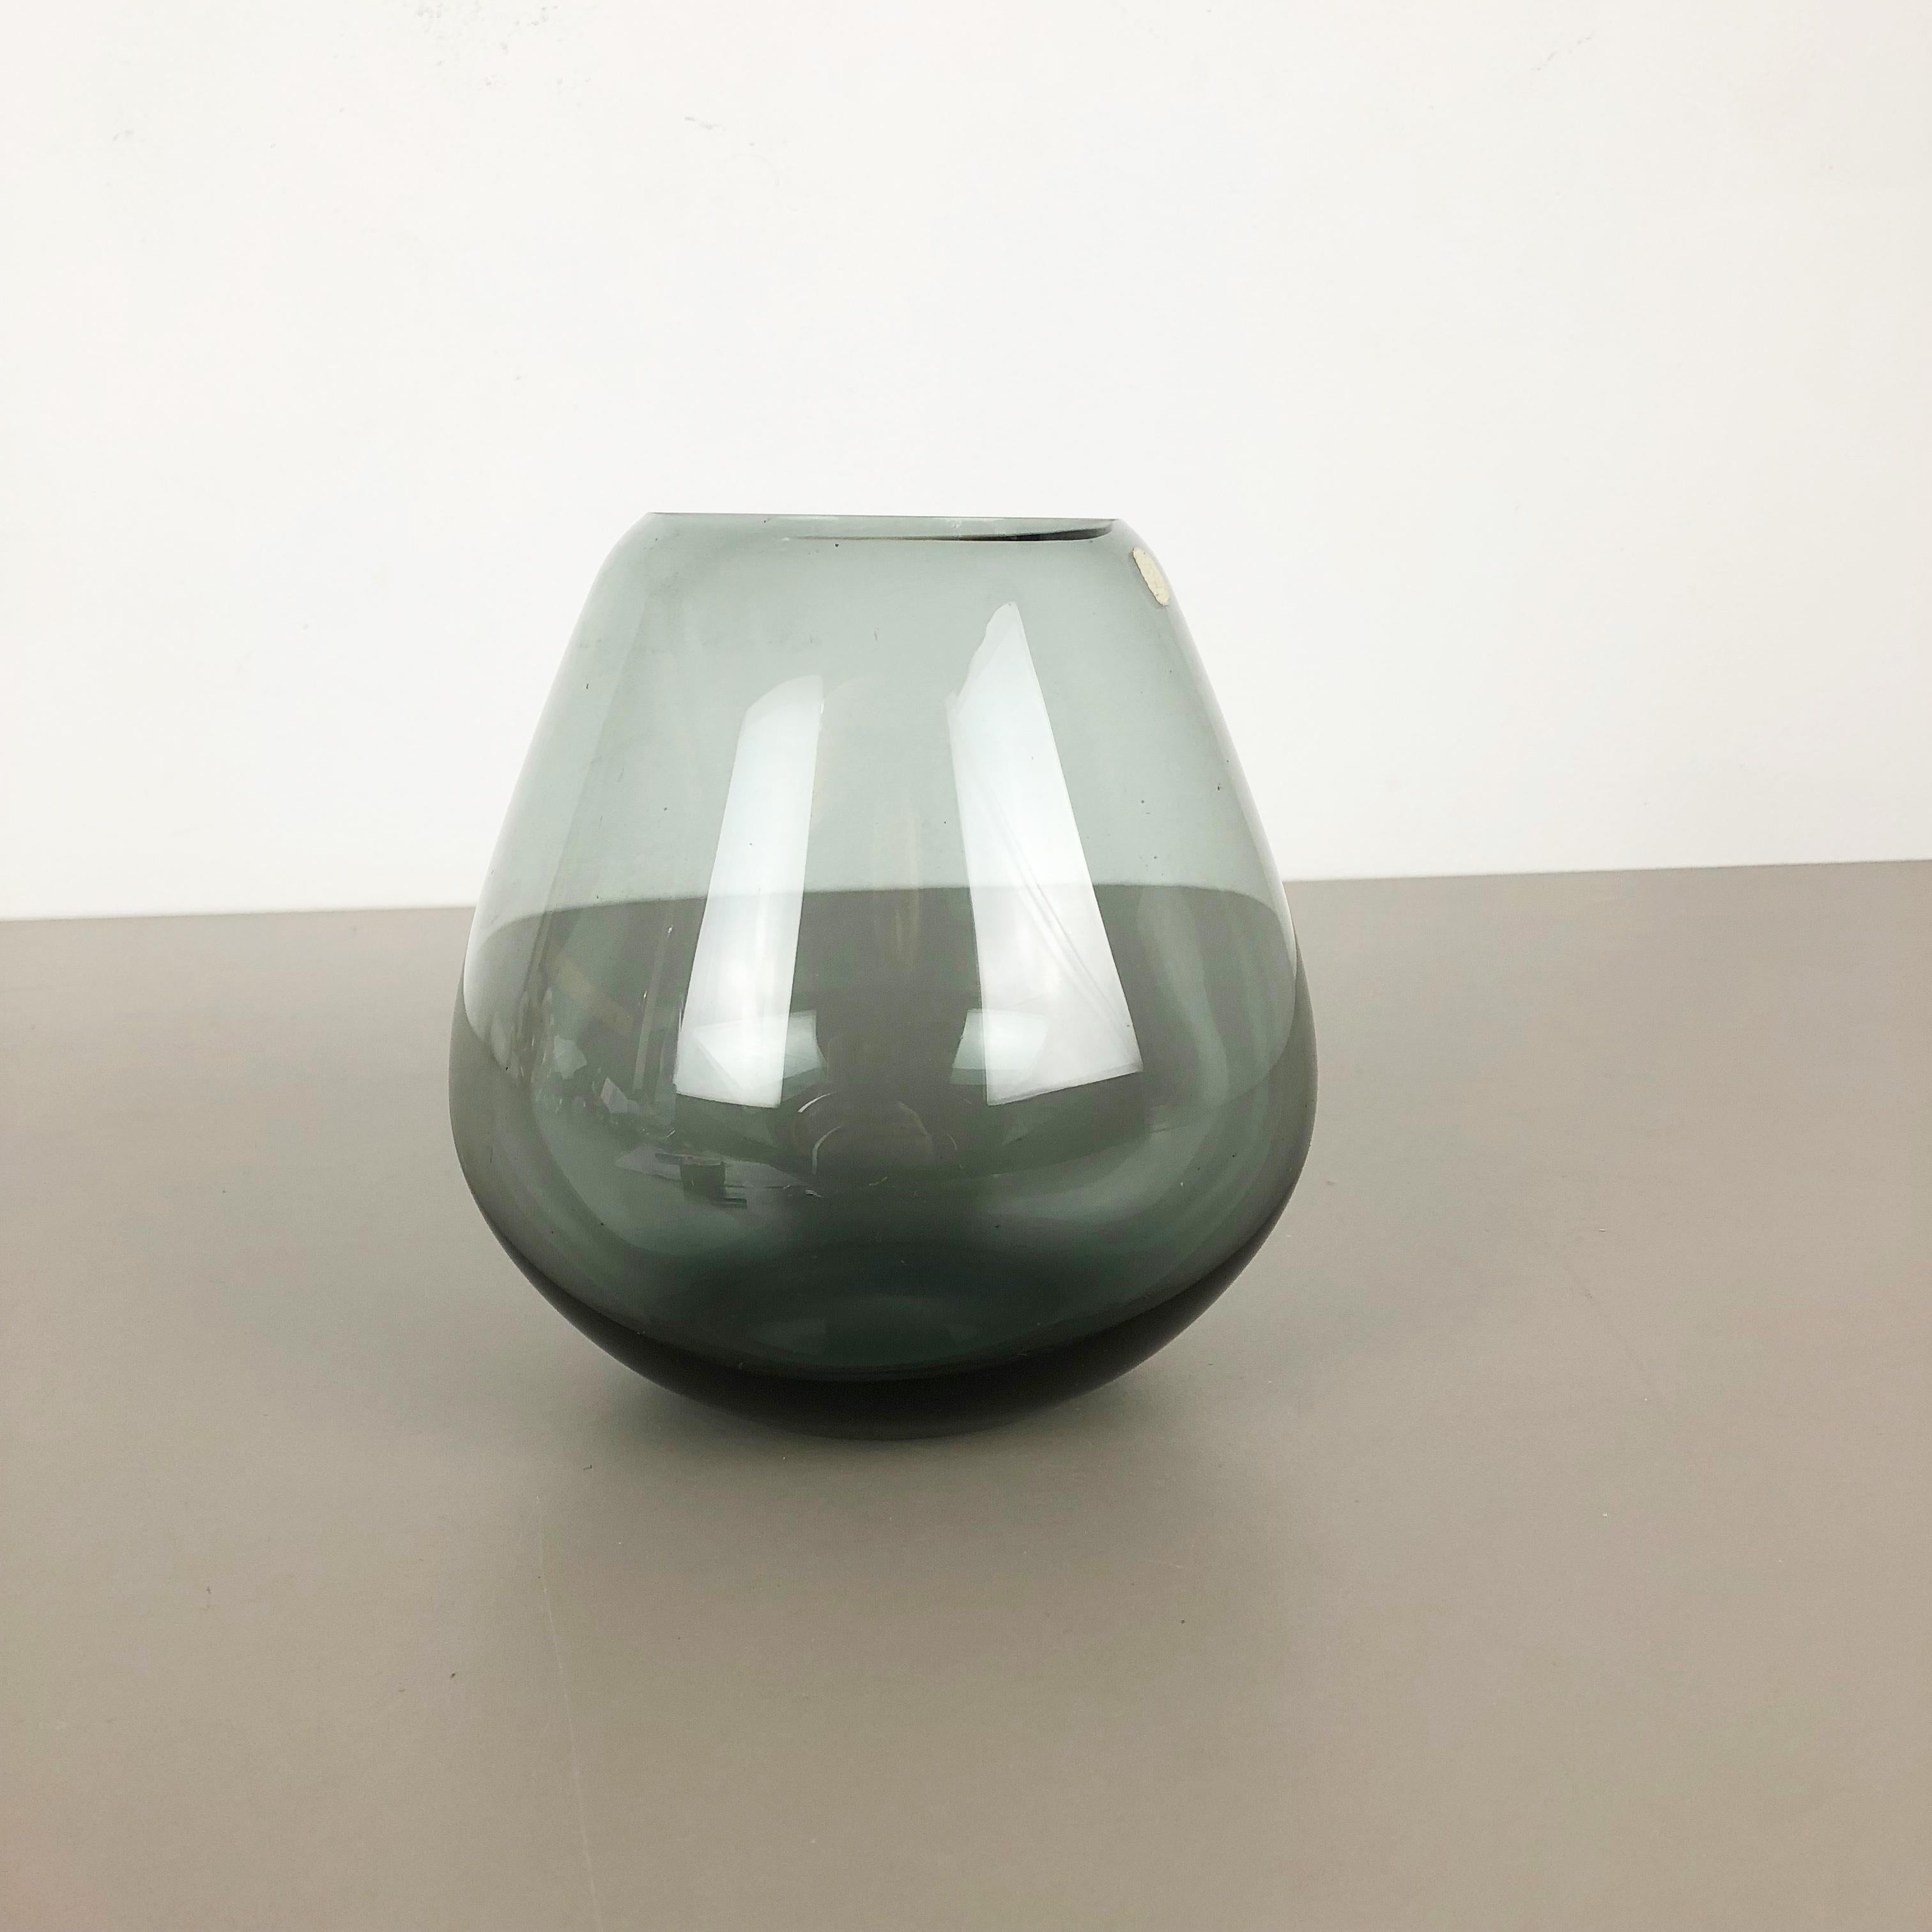 Article :

Vase en verre


Producteur :

WMF Württembergische Metallwaren Fabrikant à Geislingen 


Designer :

Wilhelm Wagenfeld 


Design :

Série WMF turmalin


Décennie :

1960s


Description :

Vase original des